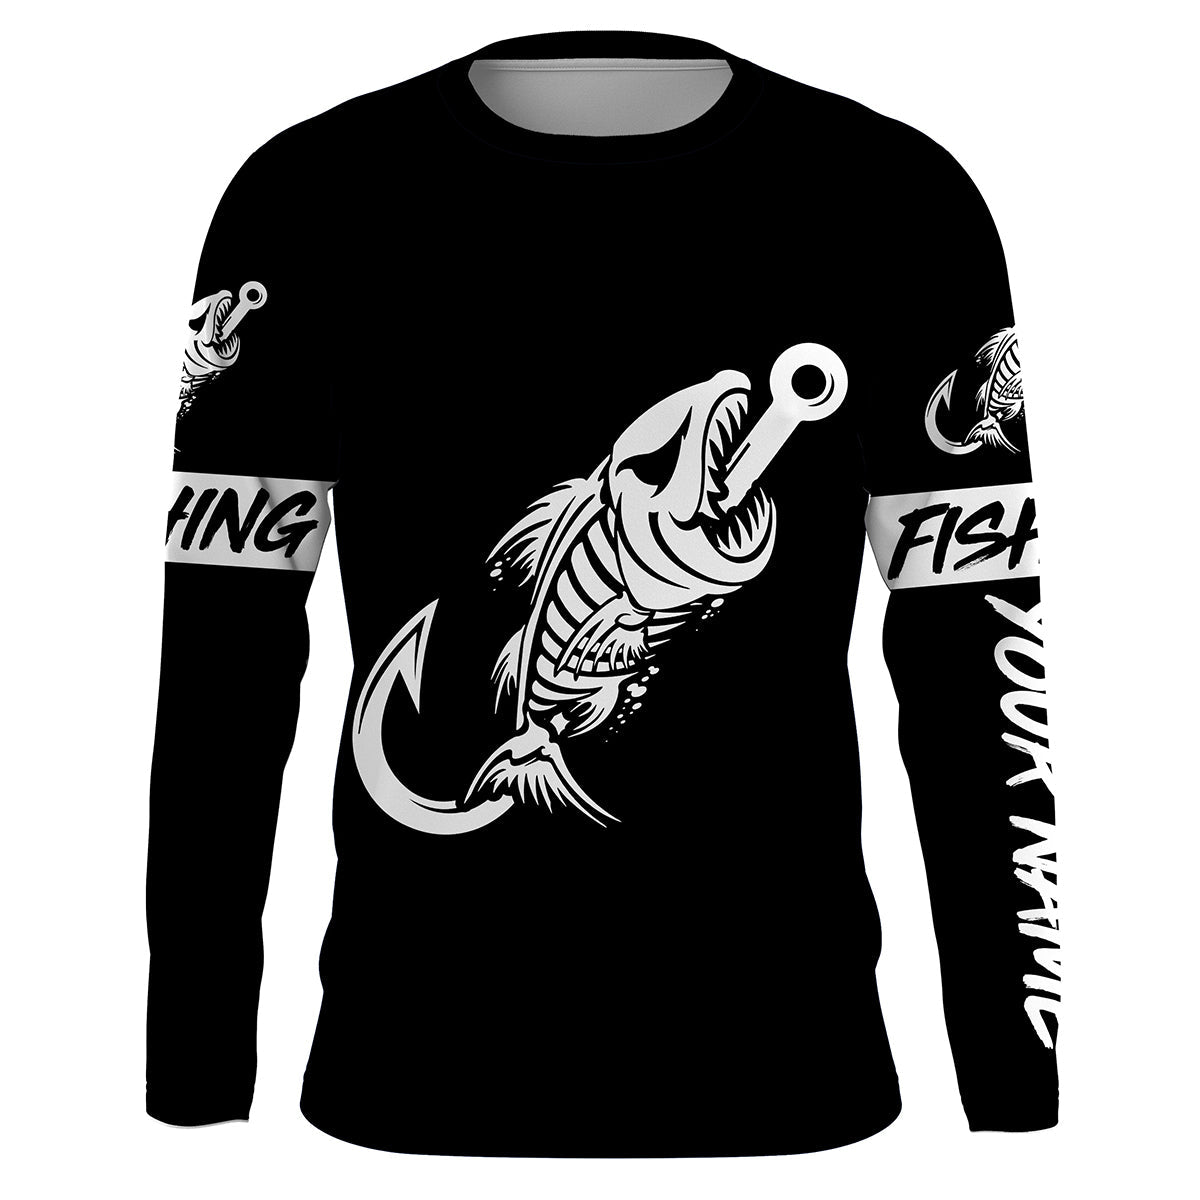 Customized black Fish hook skull reaper sun protection performance long sleeve fishing shirts NQS3518